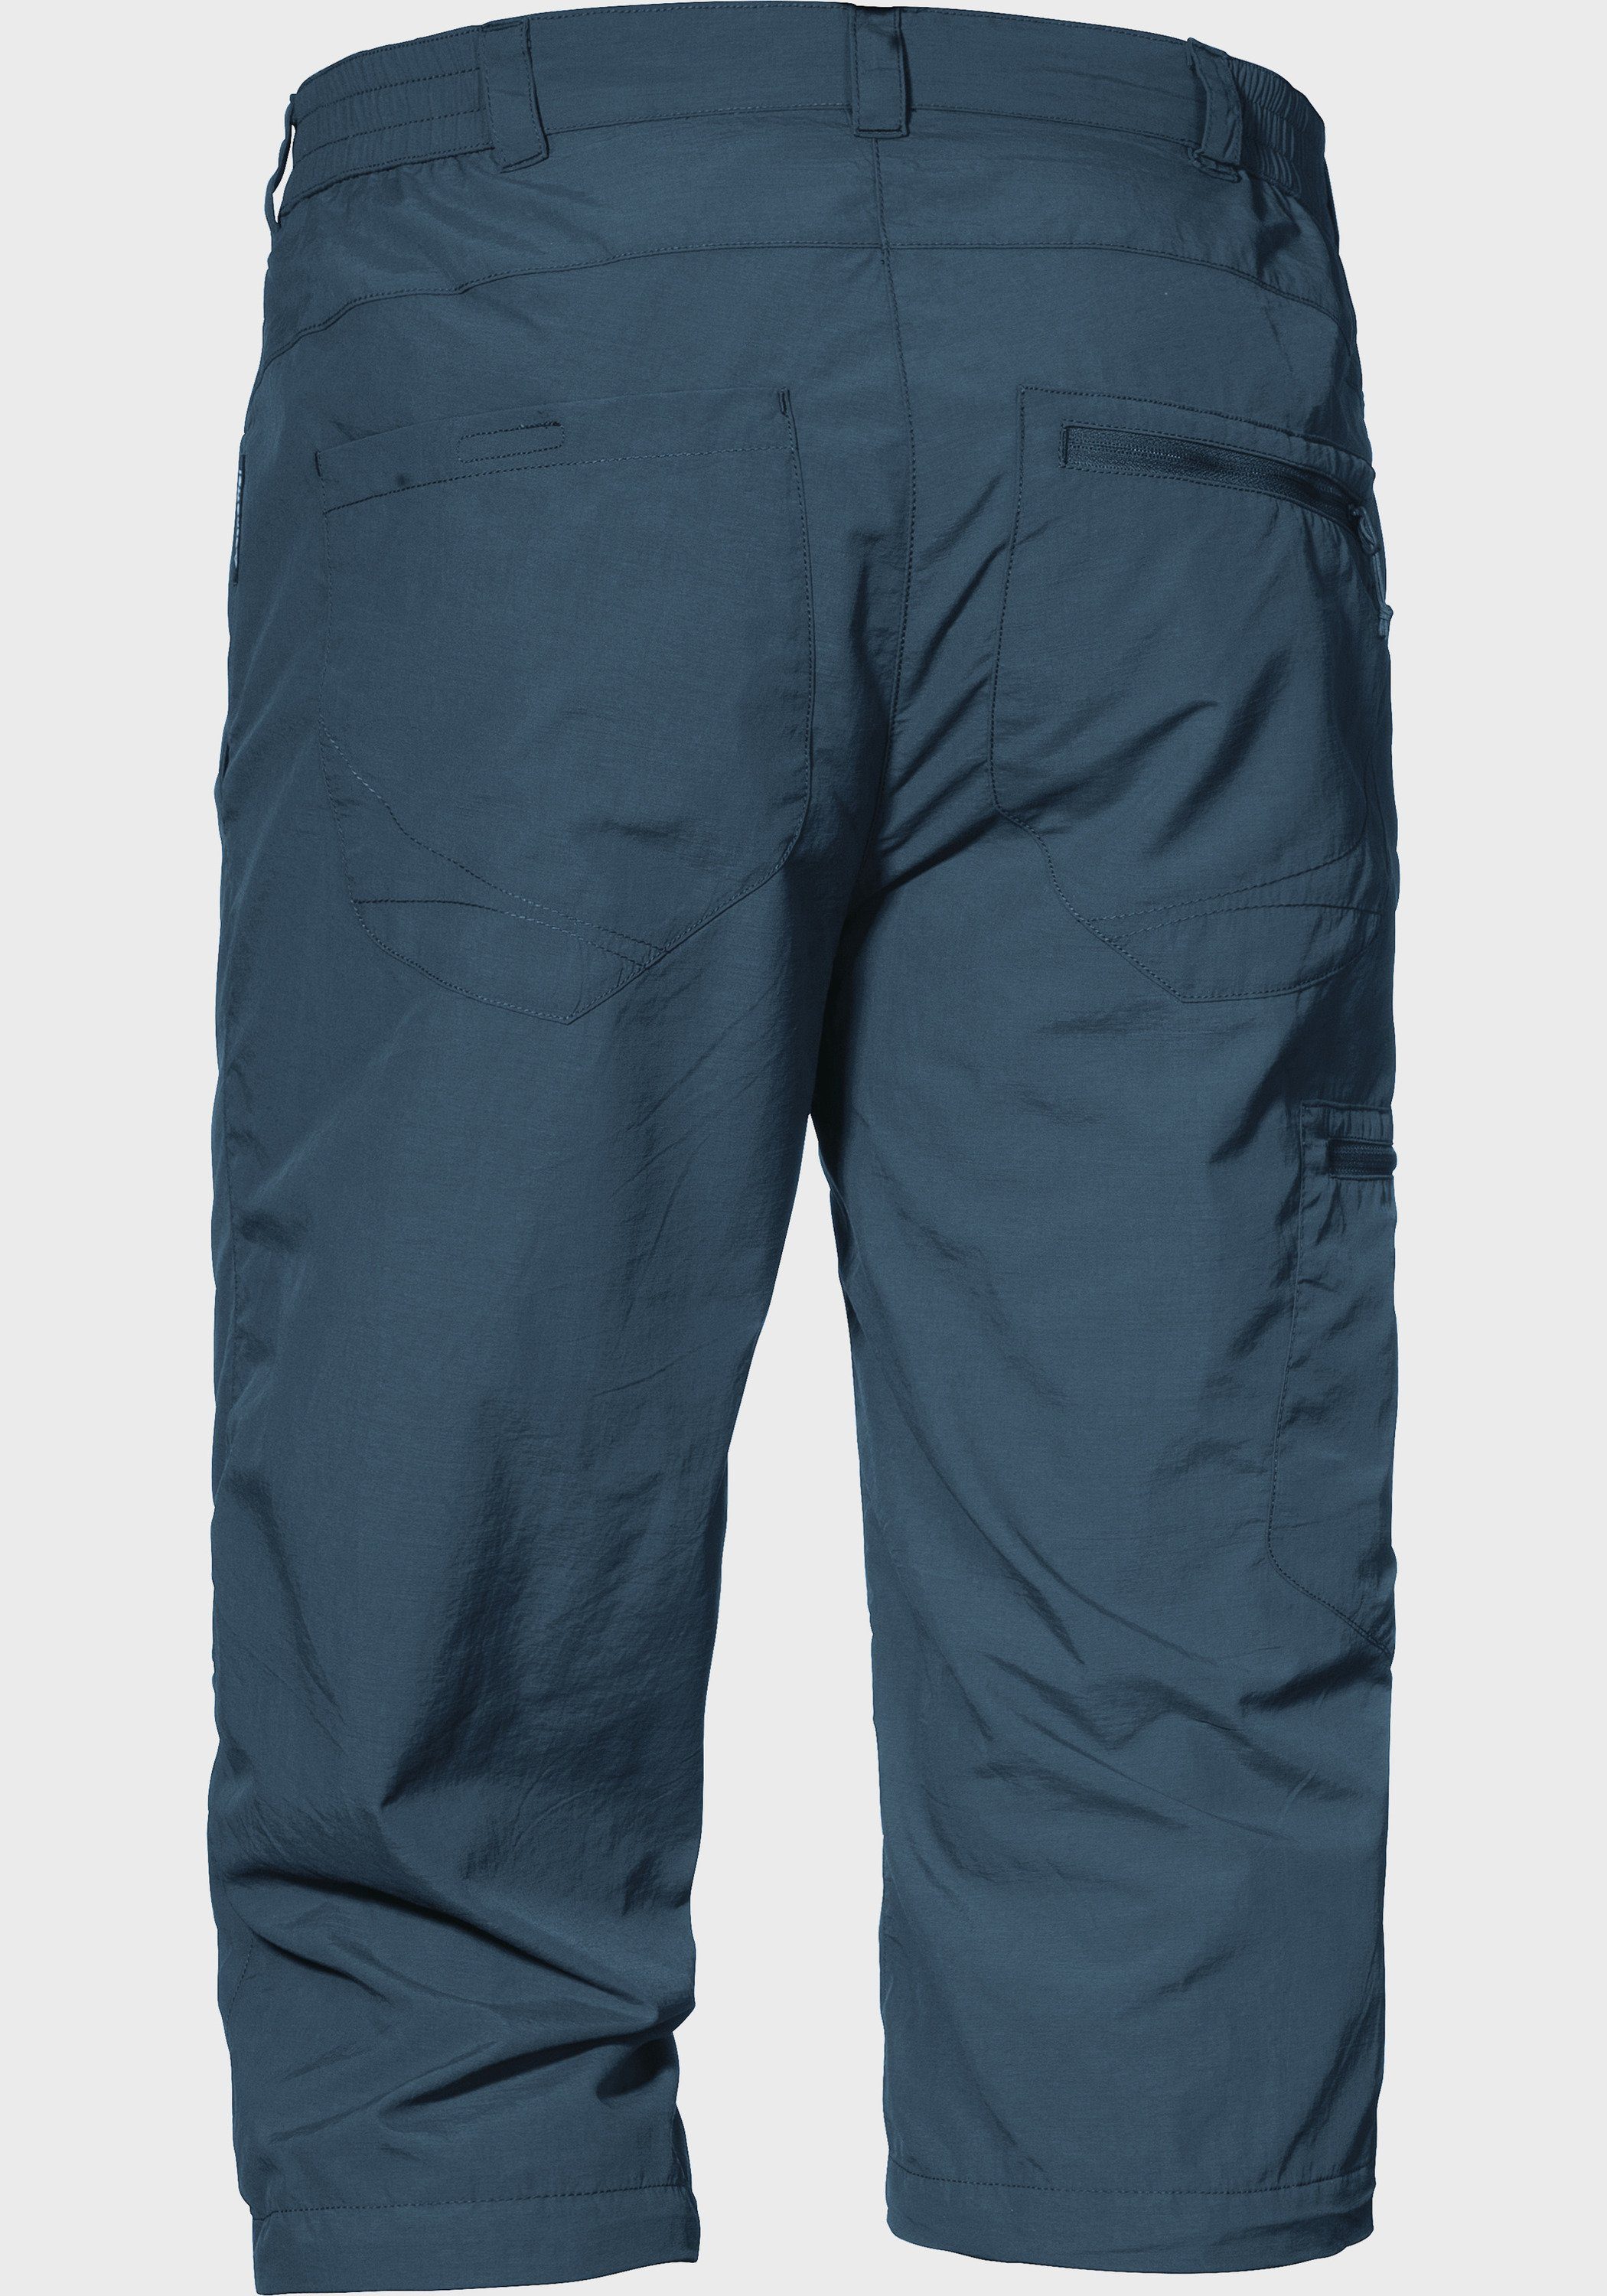 Schöffel 3/4-Hose Pants Springdale1 blau